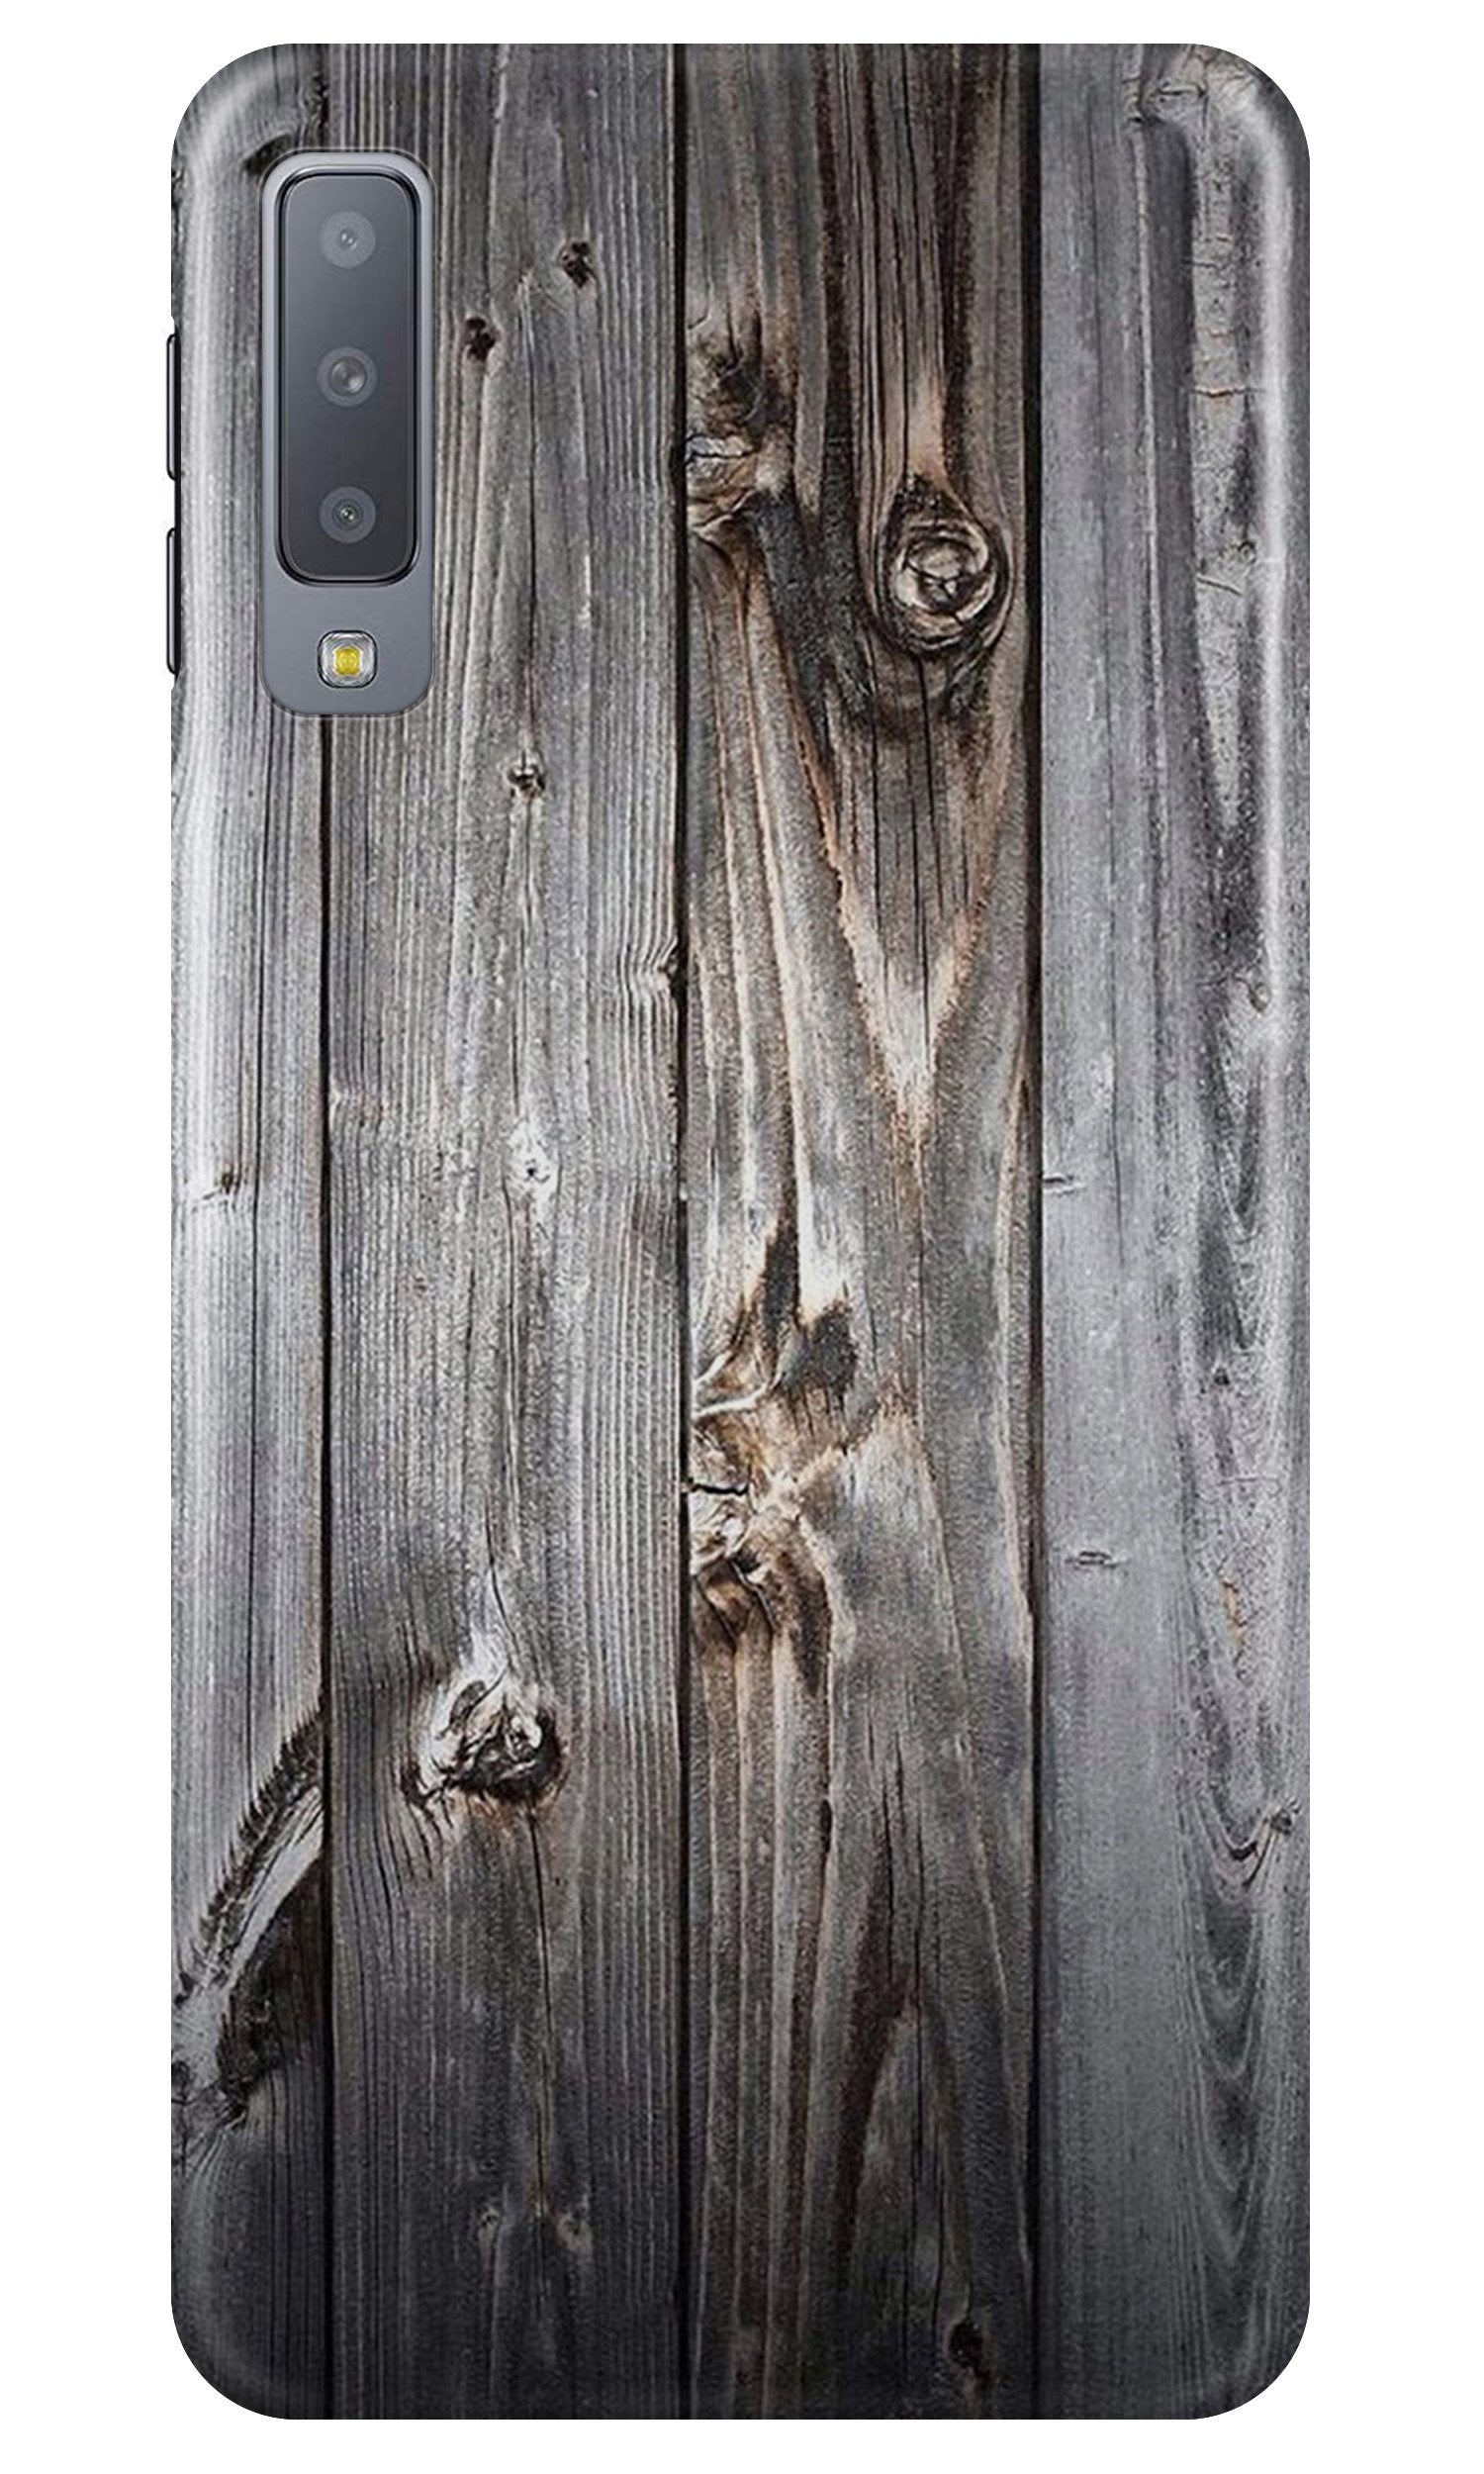 Wooden Look Case for Samung Galaxy A70s  (Design - 114)